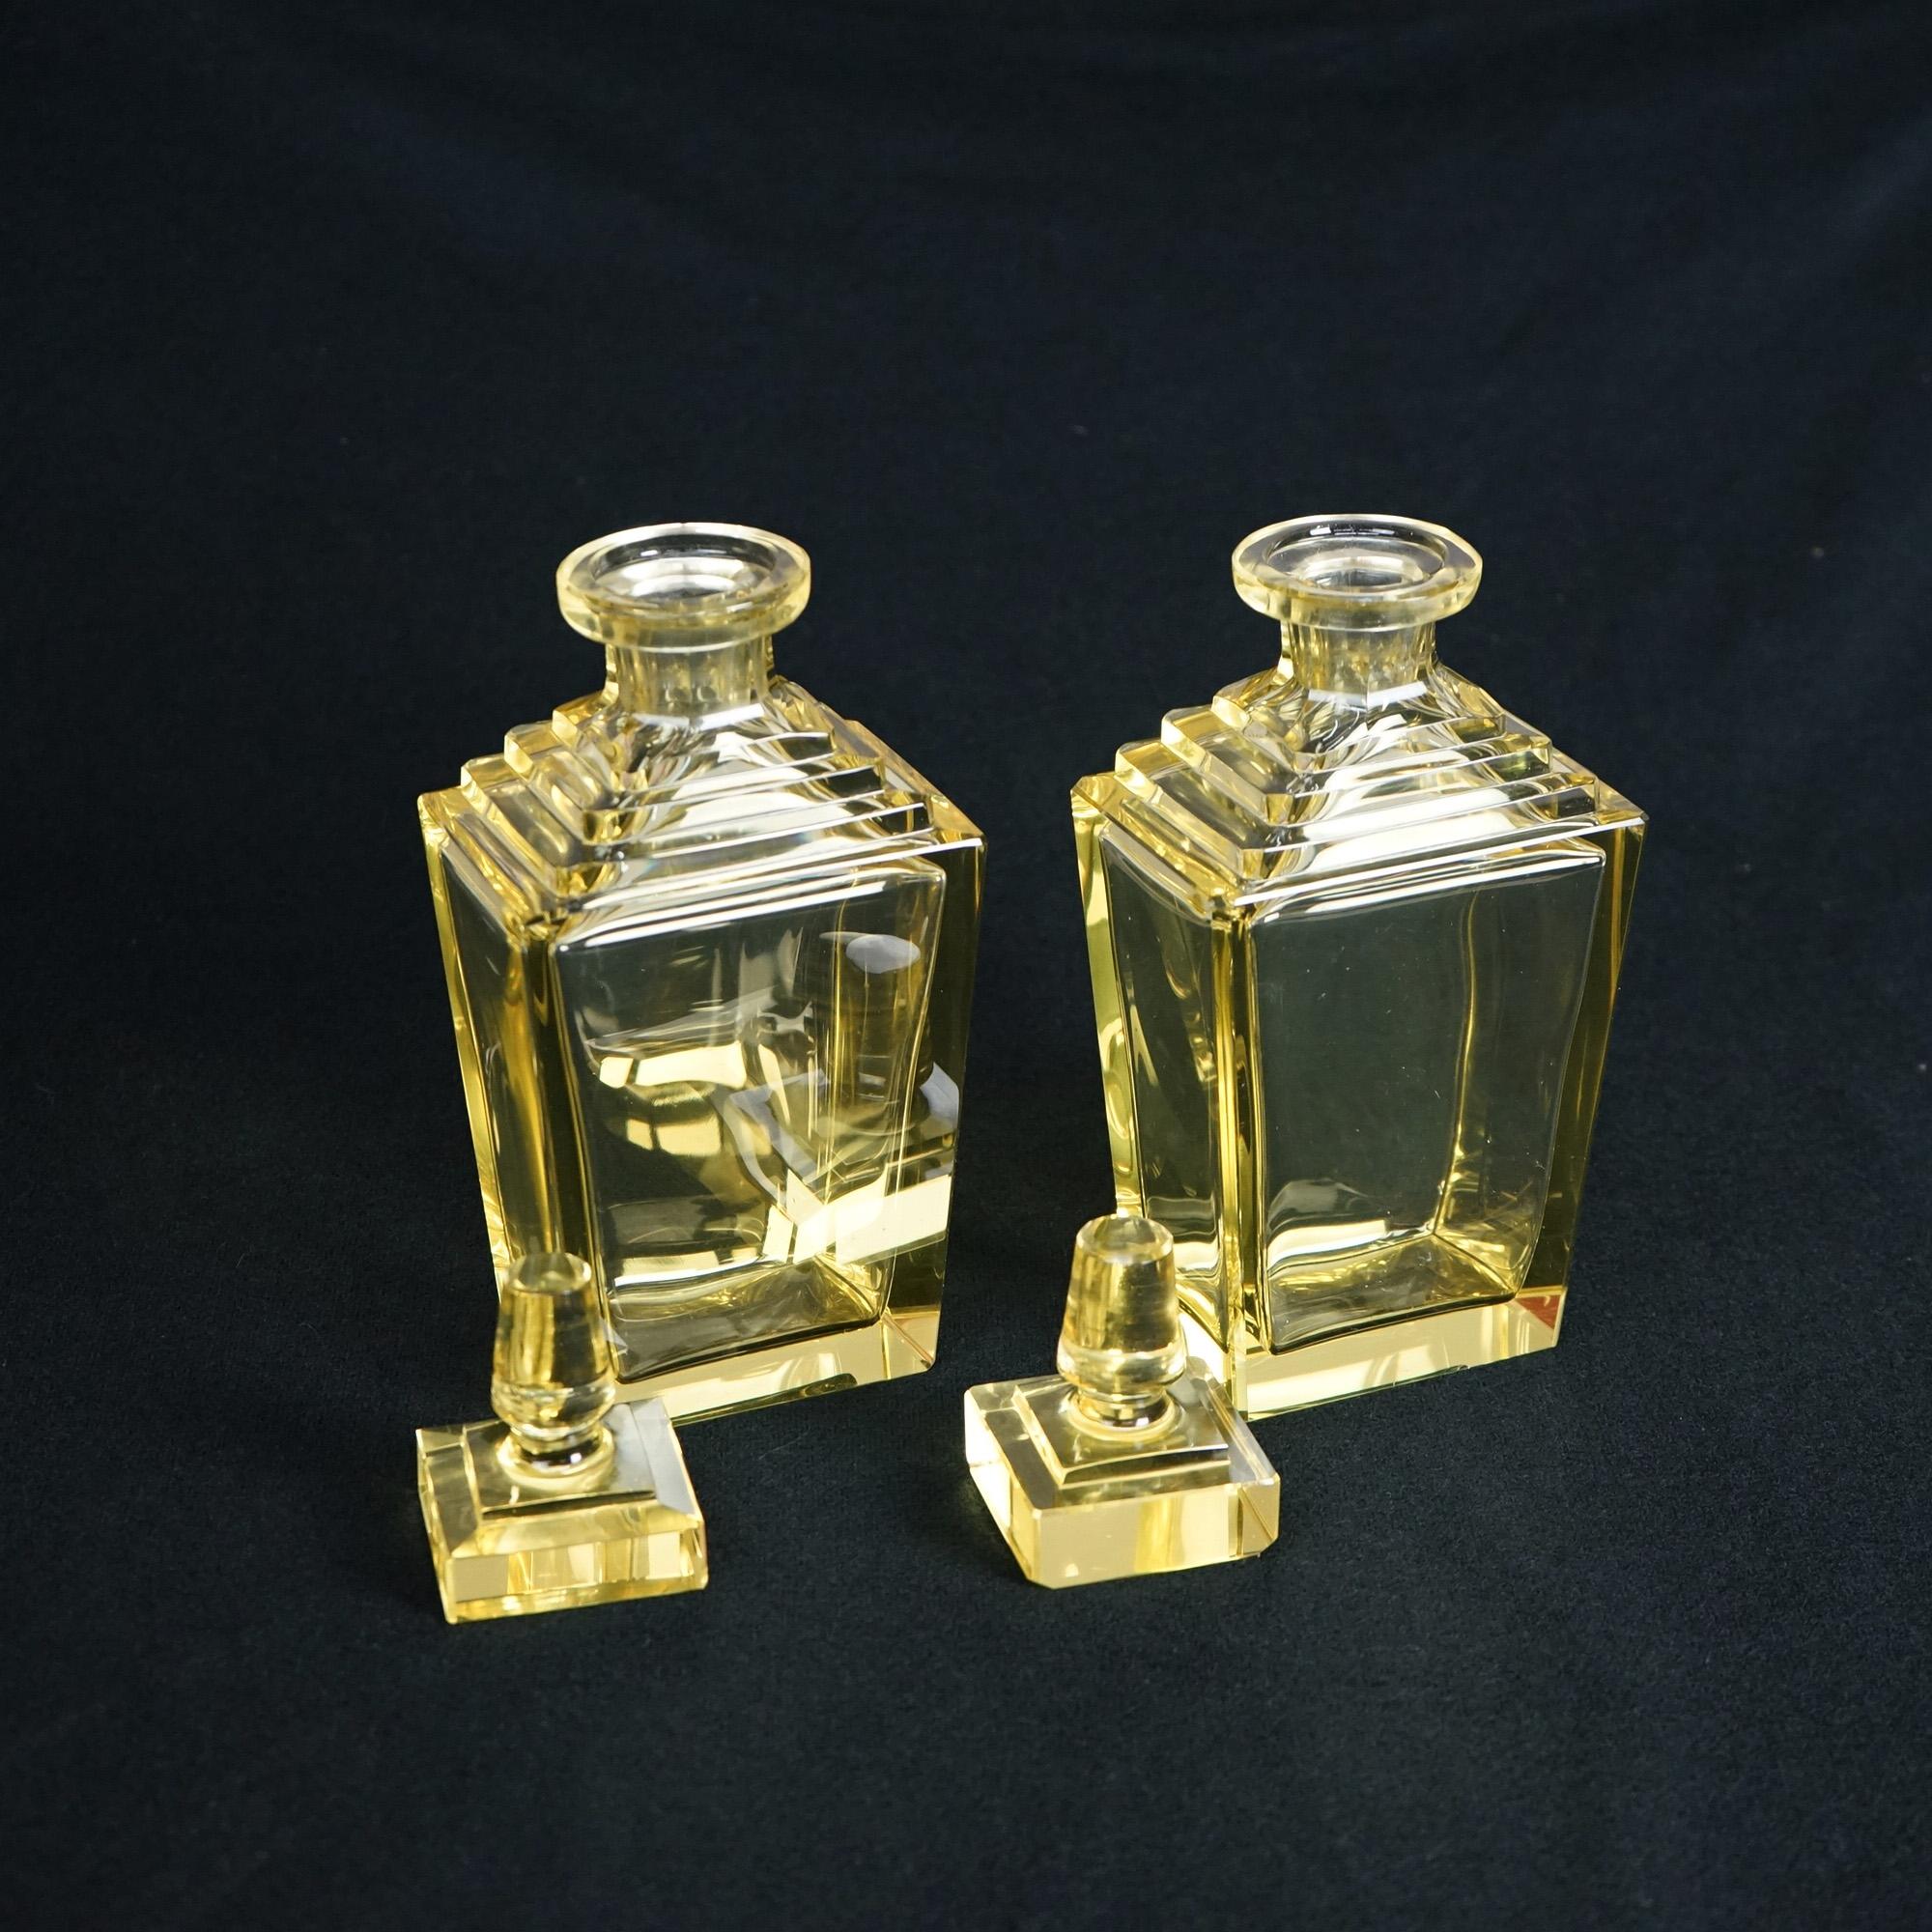 European Antique Pair of Baccarat School Crystal Art Deco Citrine Glass Decanters c1920